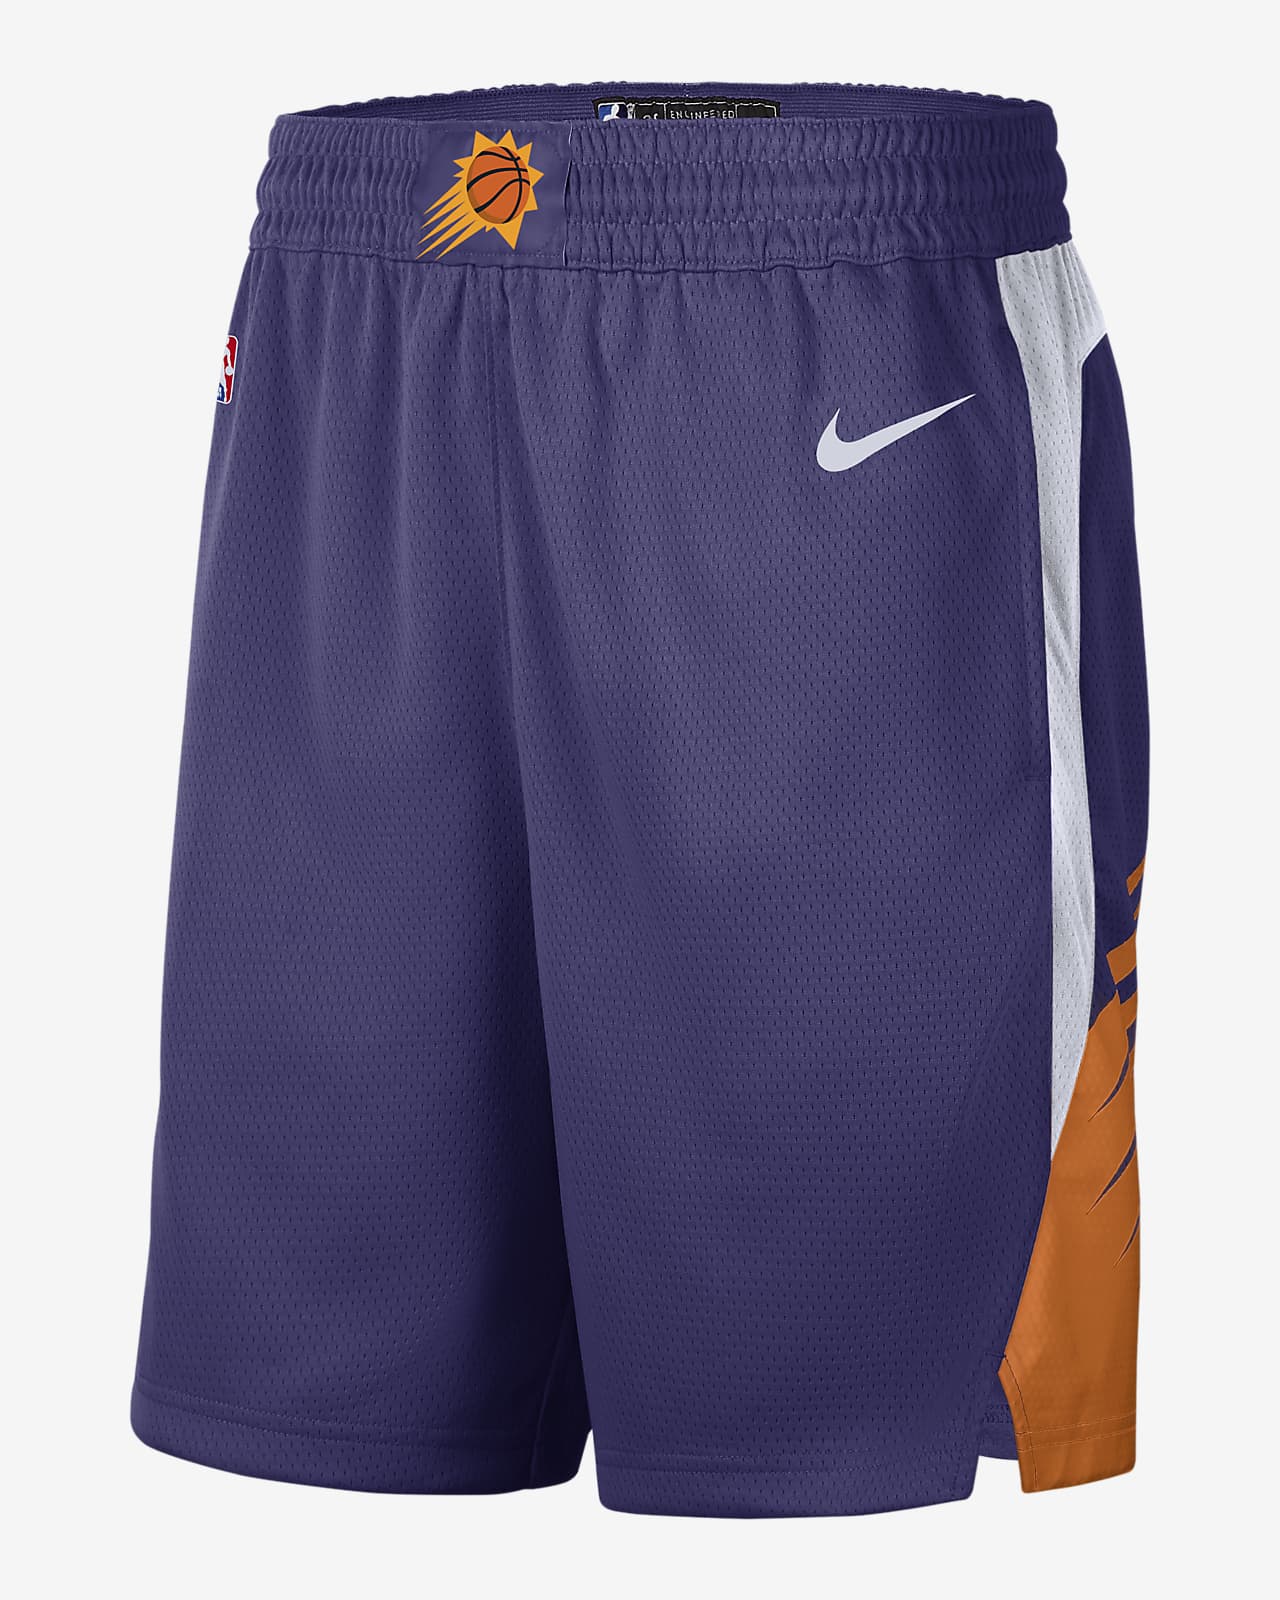 Phoenix Suns Icon Edition Men's Nike Dri-FIT NBA Swingman Shorts